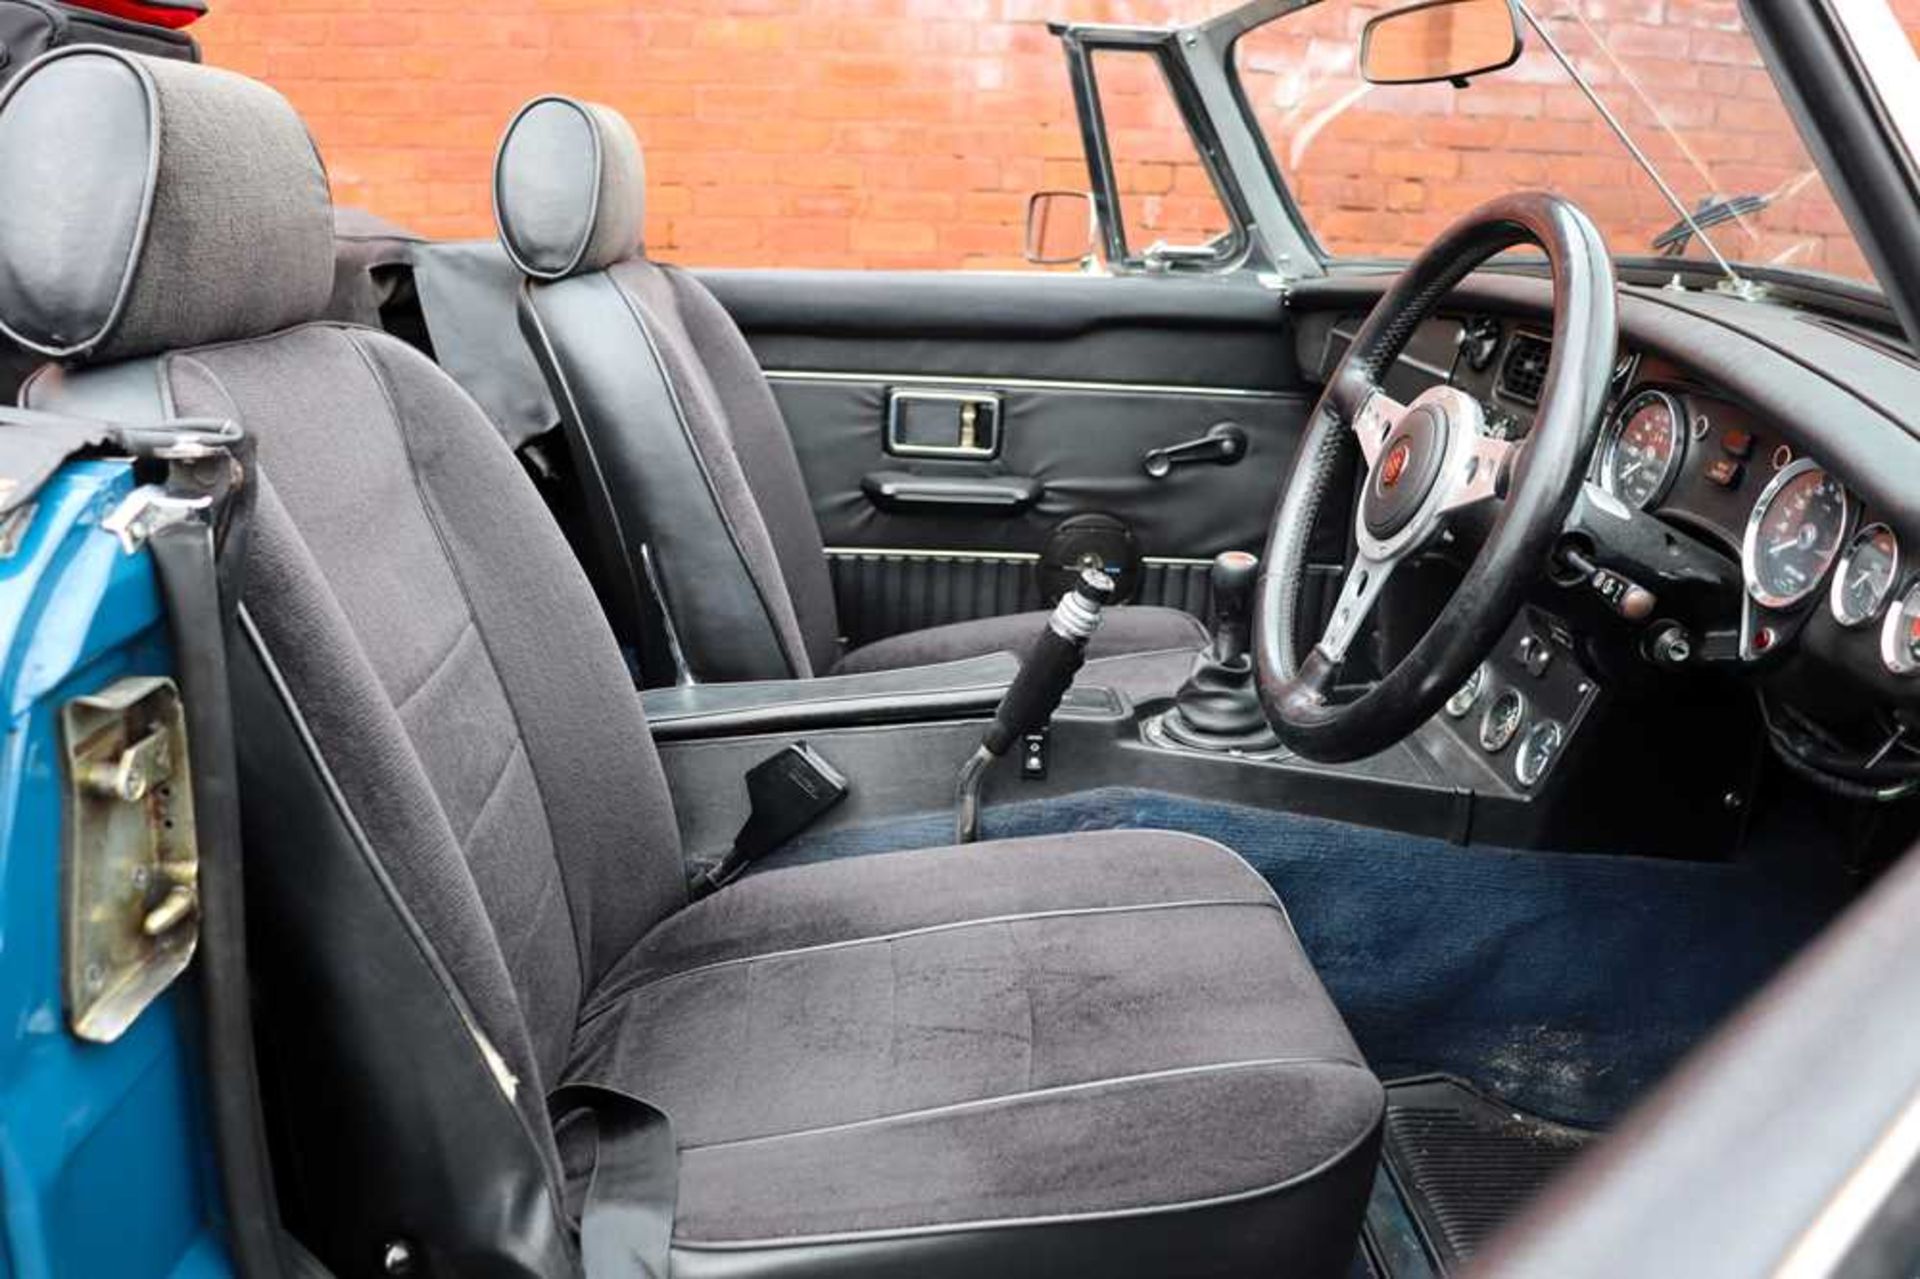 1975 MG B Roadster - Image 16 of 60